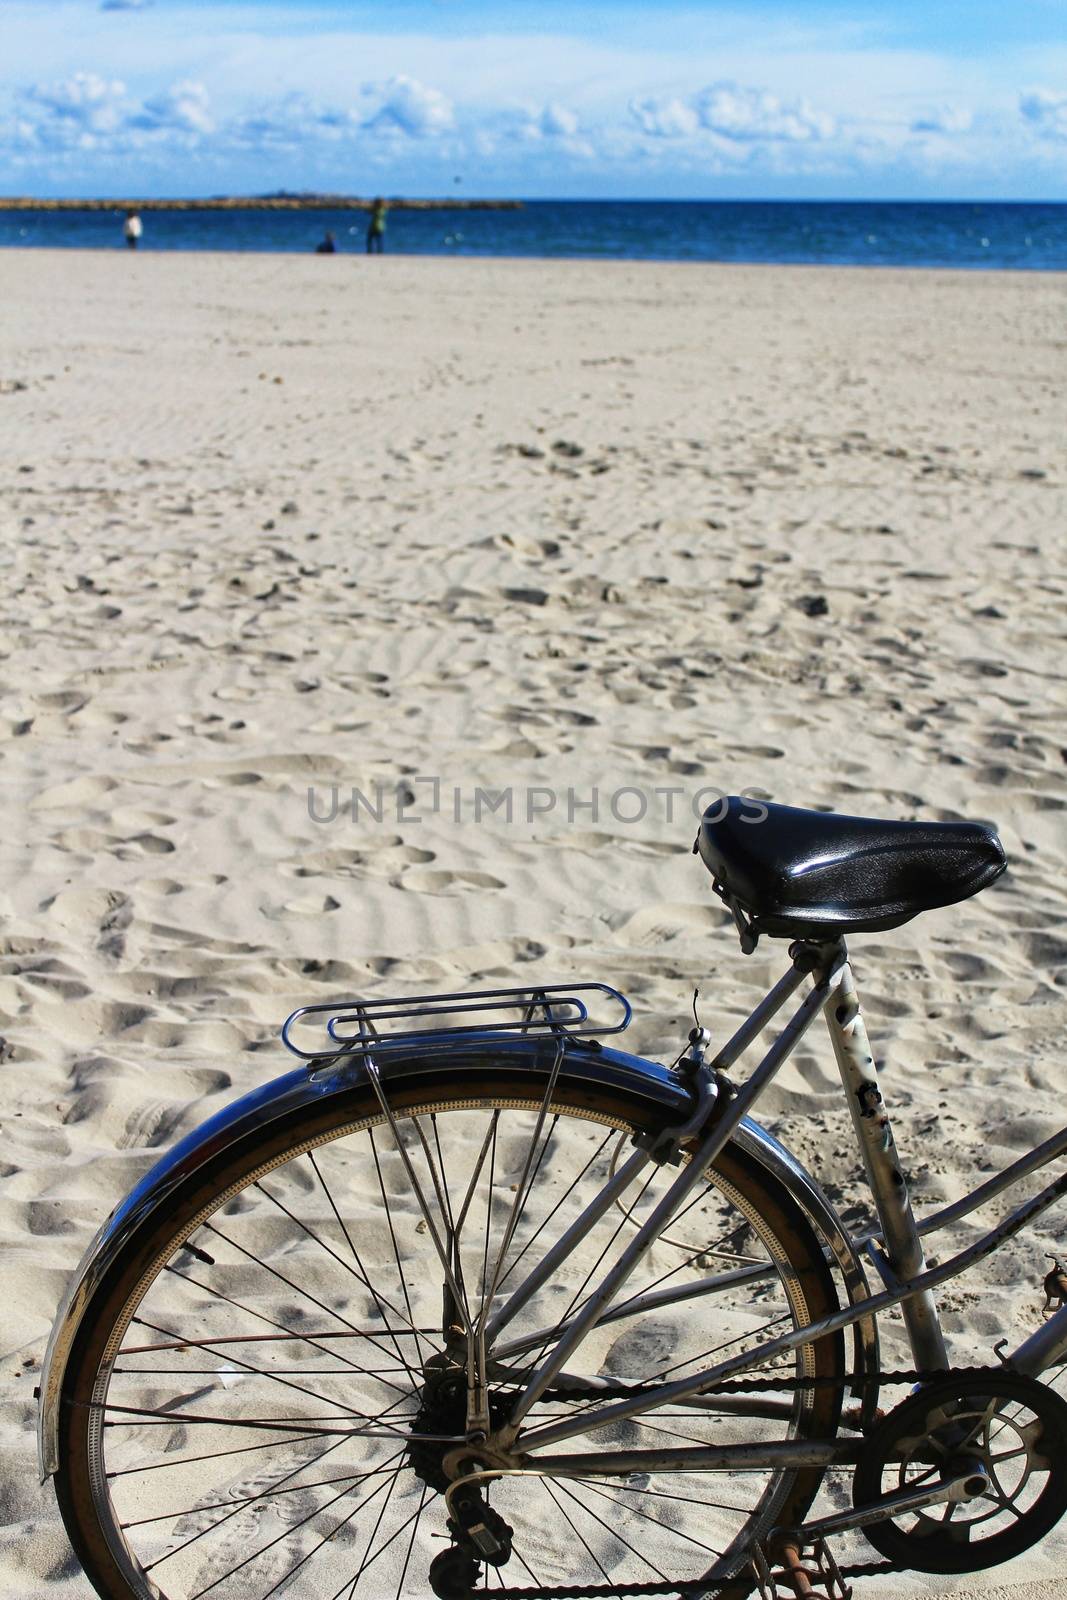 Vintage bicycle on the beach in Santa Pola, Spain by soniabonet